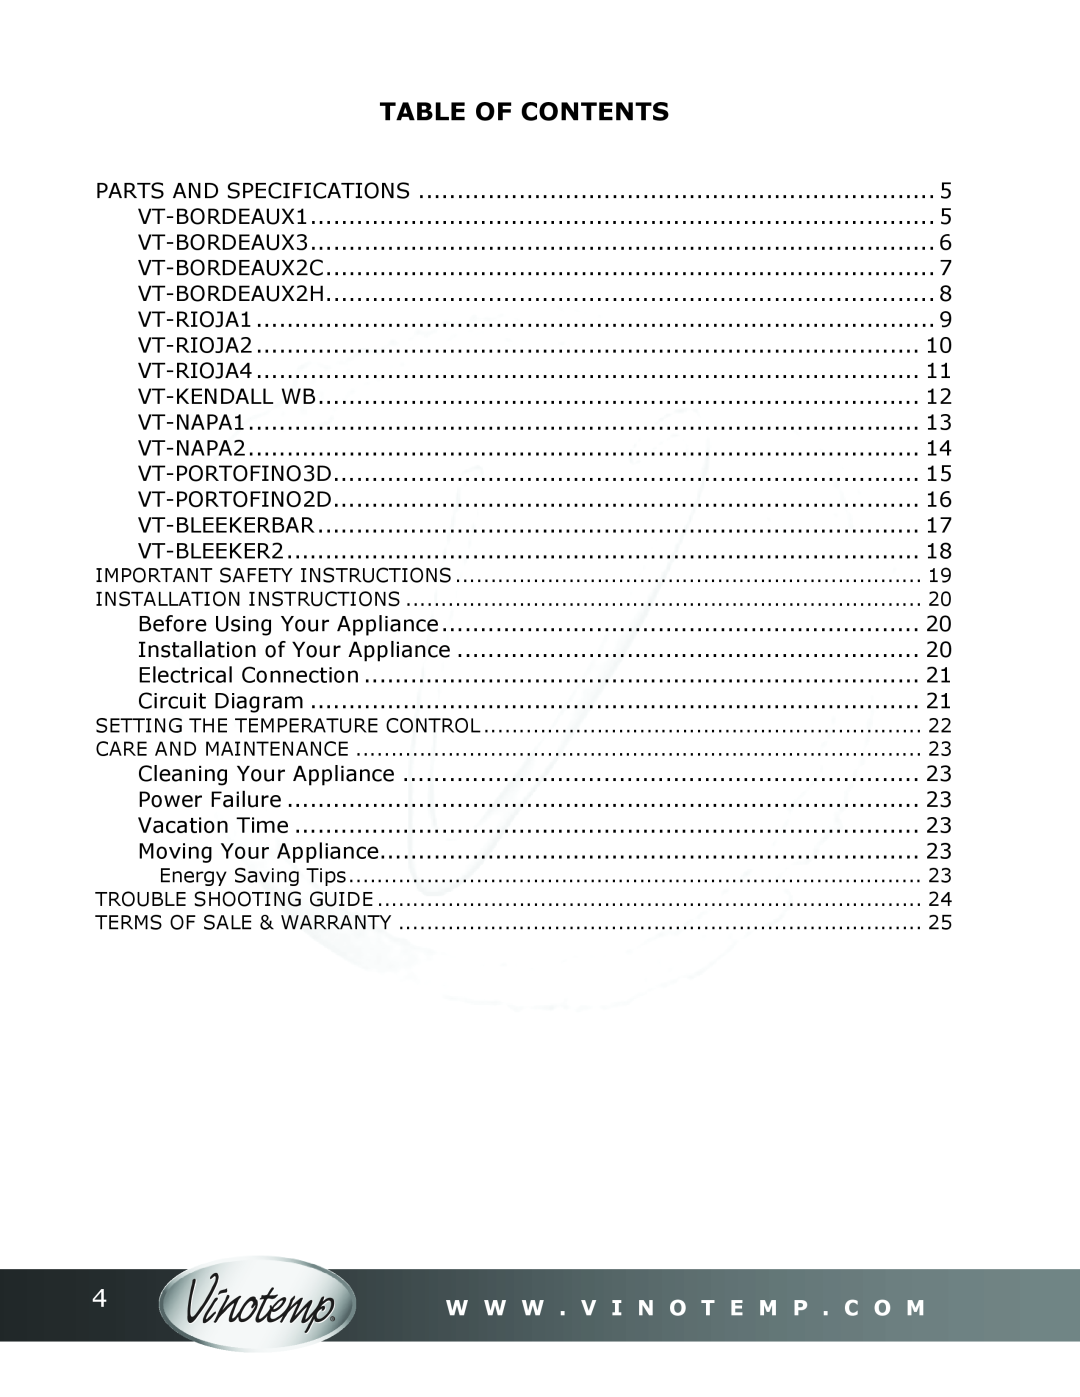 Vinotemp Portofino owner manual Table Of Contents, W W W . V I N O T E M P . C O M 